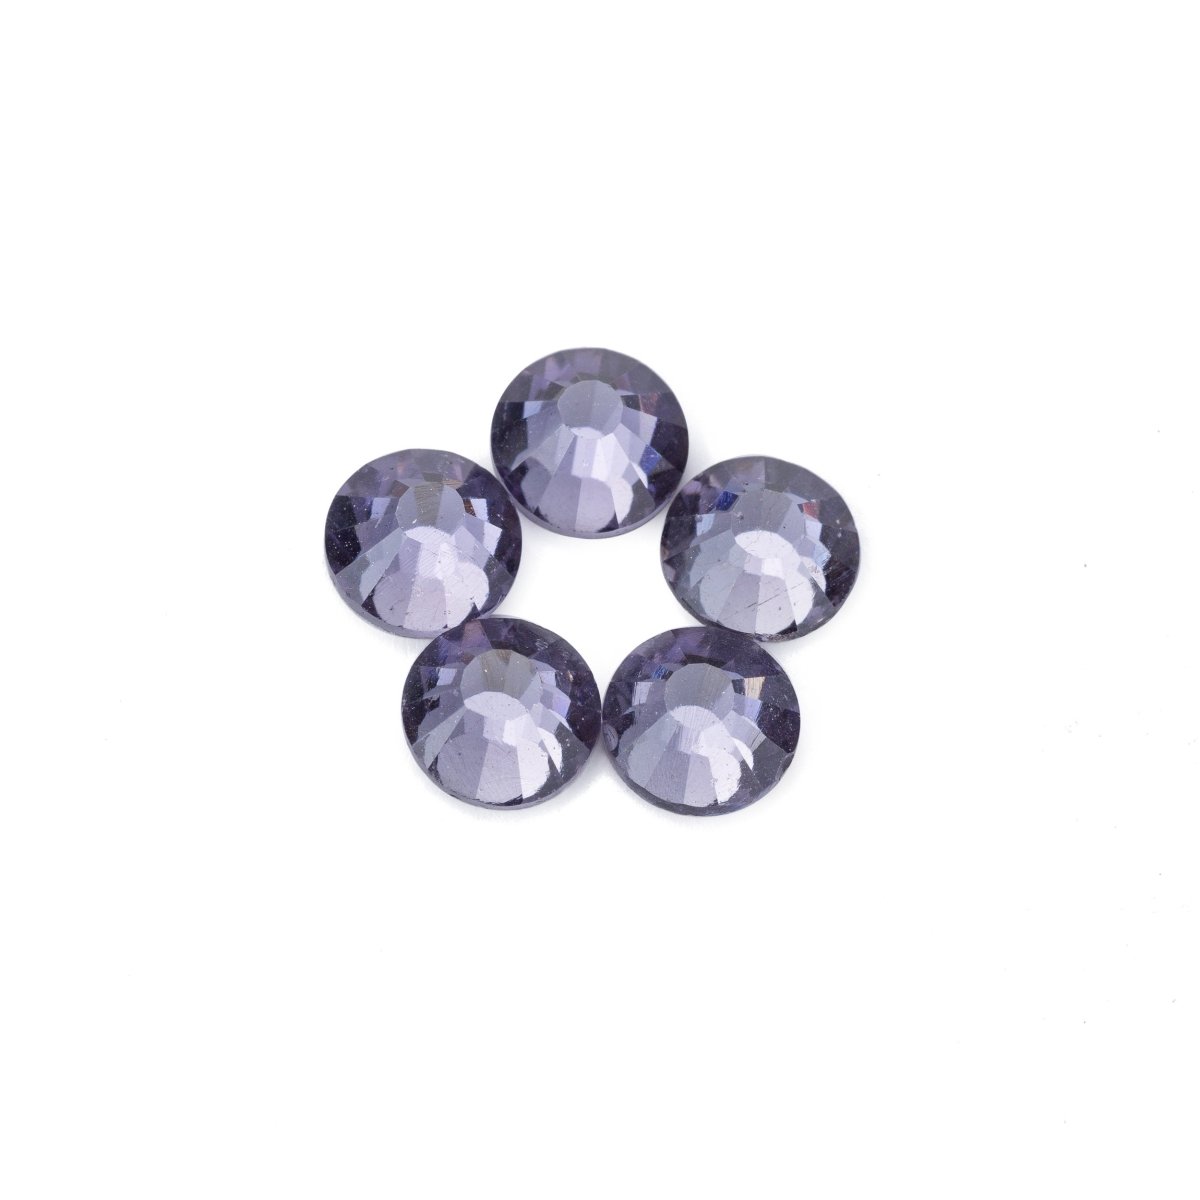 288 pcs High Quality Crystal Dark Purple Tanzanite Rhinestones Loose wholesale Crystal flat back No Hot Fix glass bead Size ss 30 / ss 34,288-SS30-TANZANITE - DLUXCA